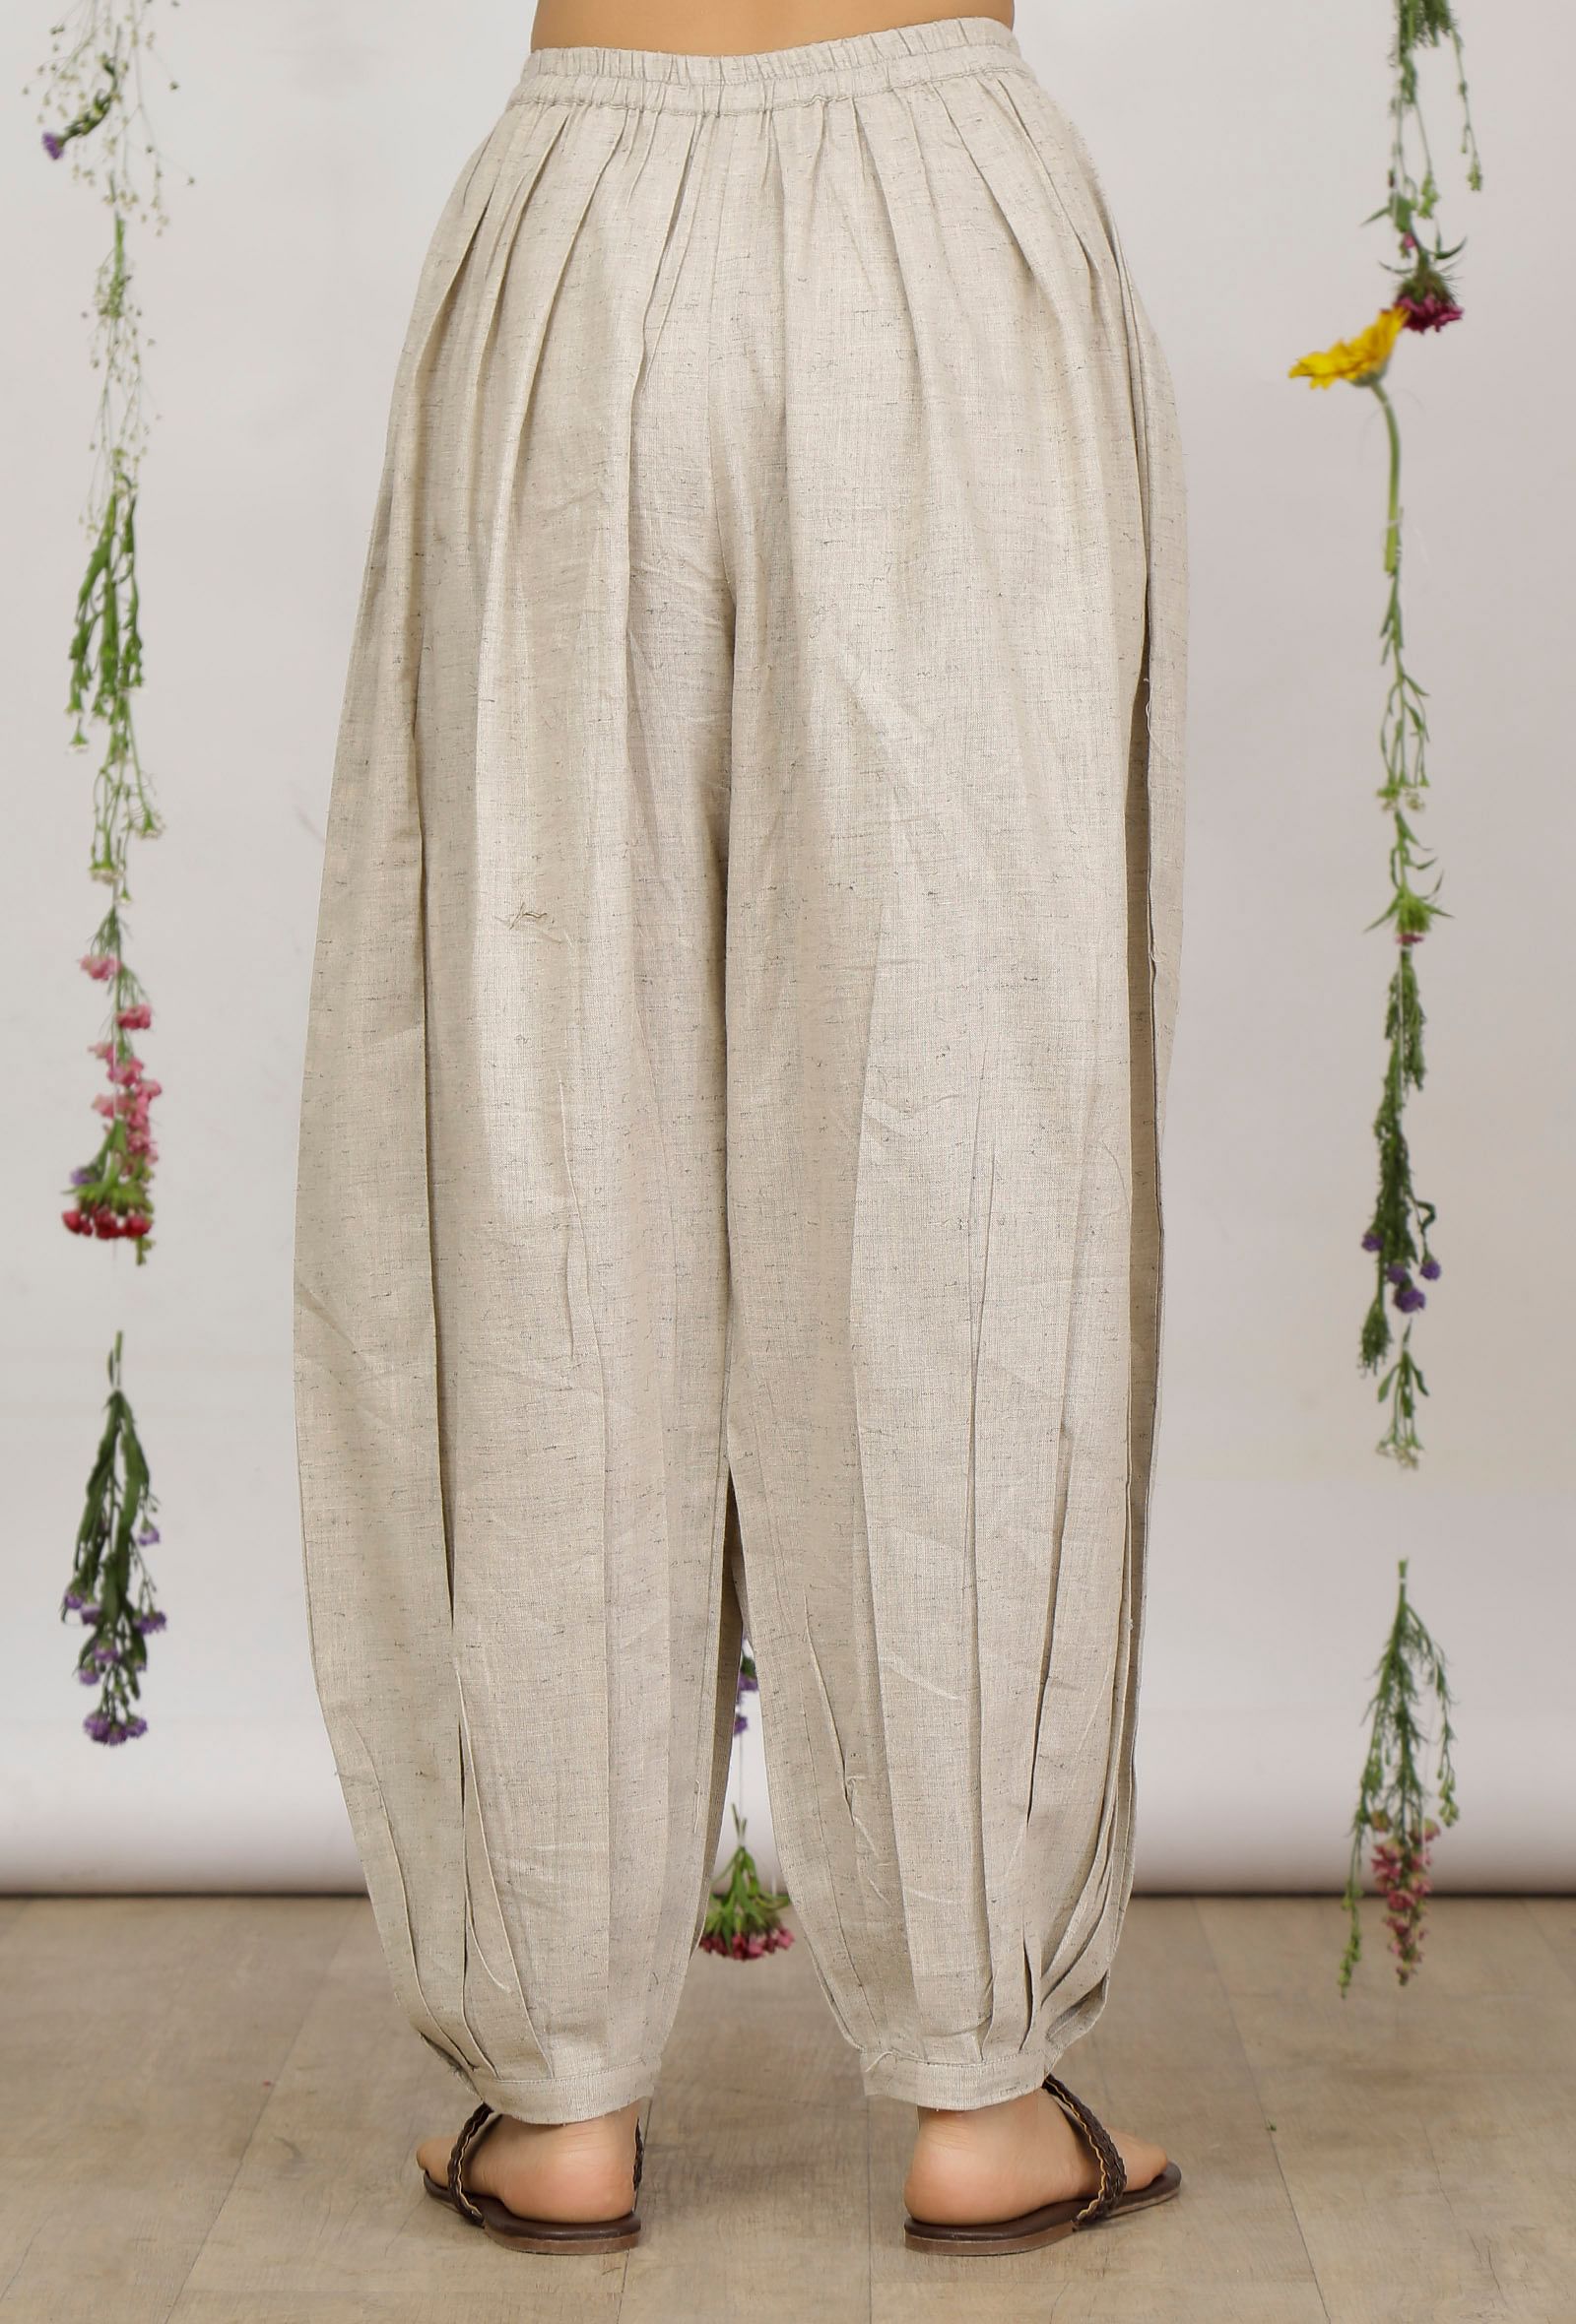 White Patchwork Linen Harem Pants for Summer